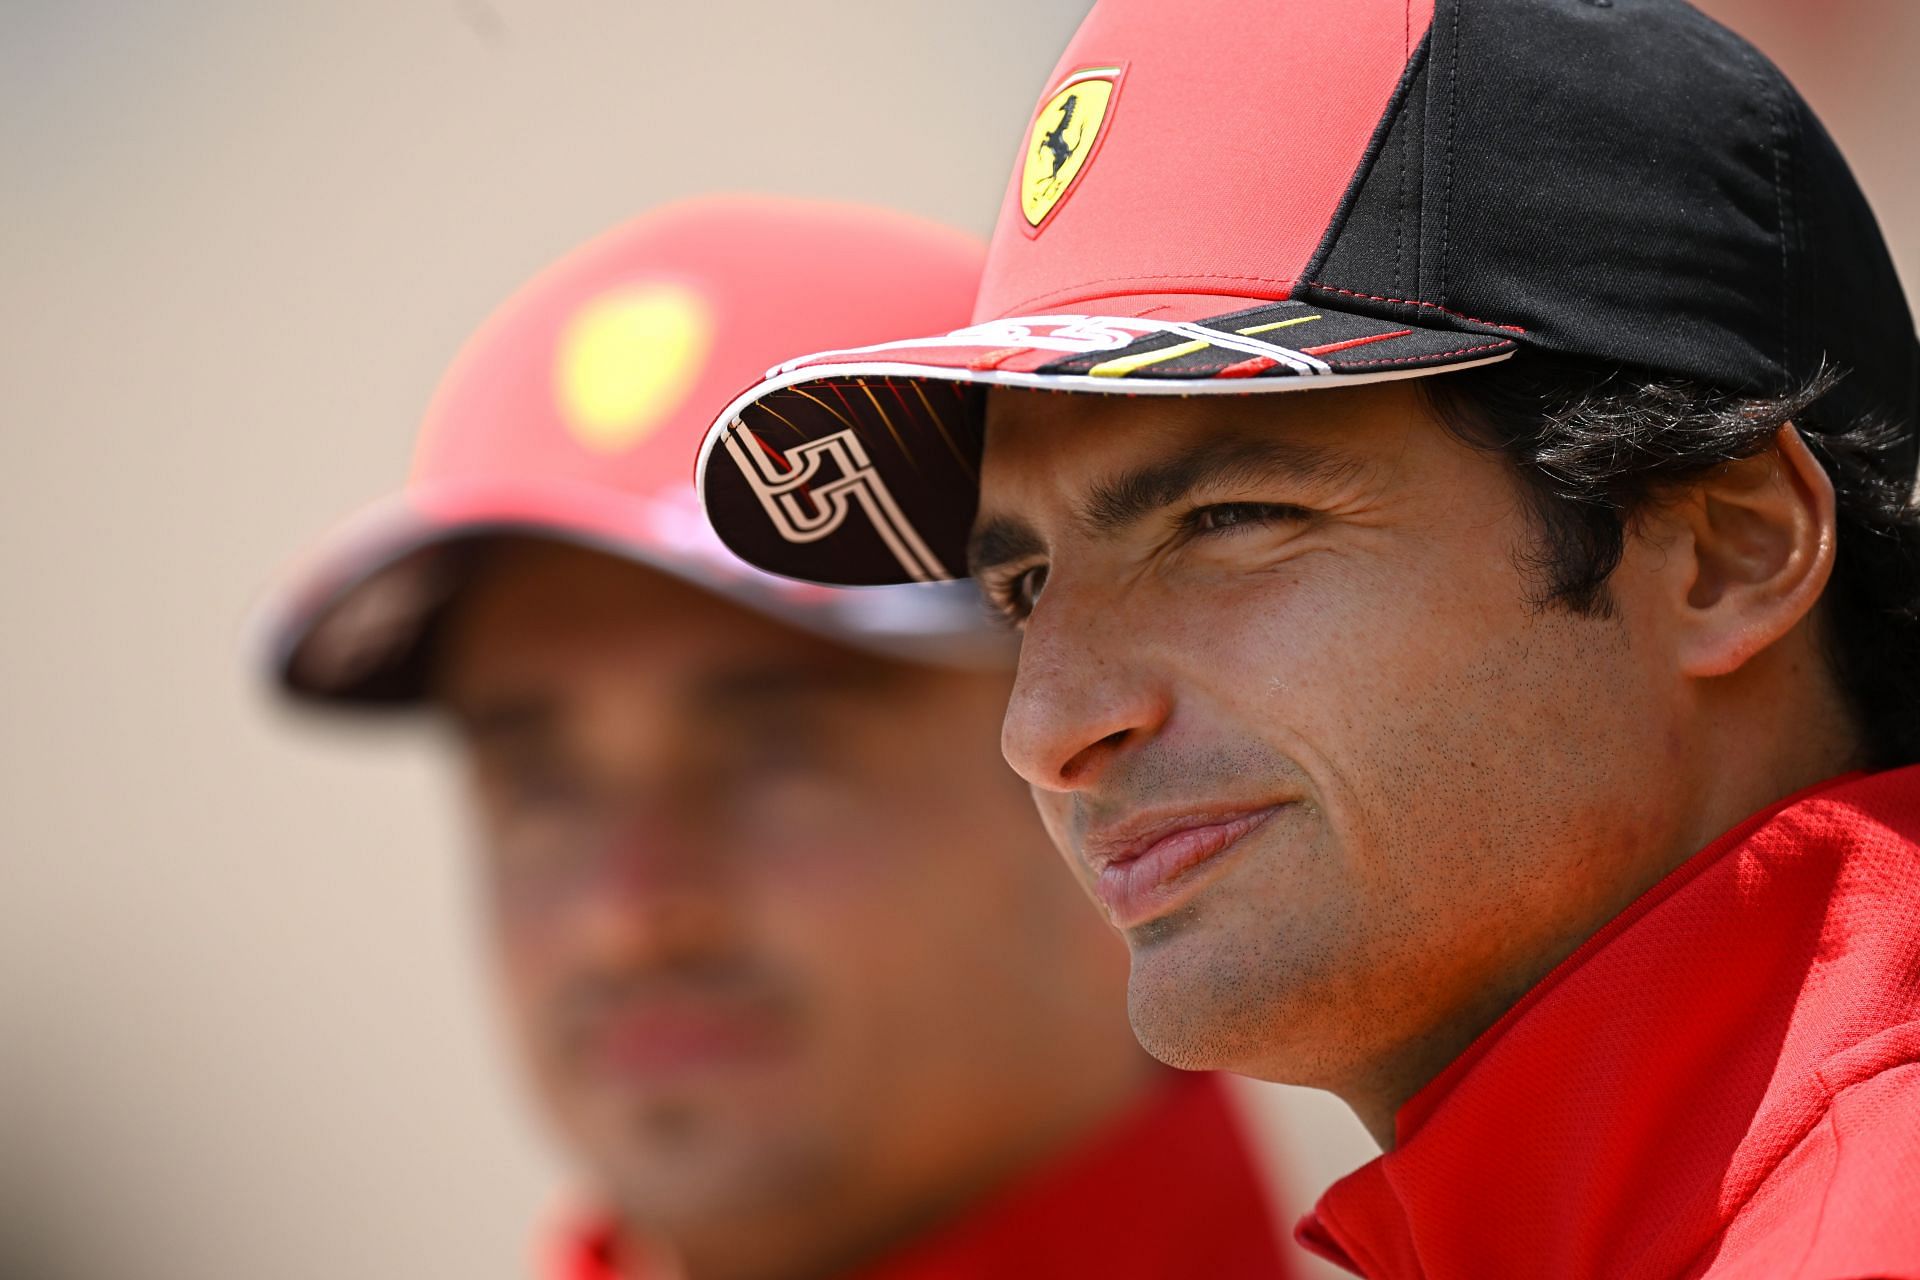 F1 Grand Prix of Bahrain - Carlos Sainz takes on the pre-season testing in Bahrain